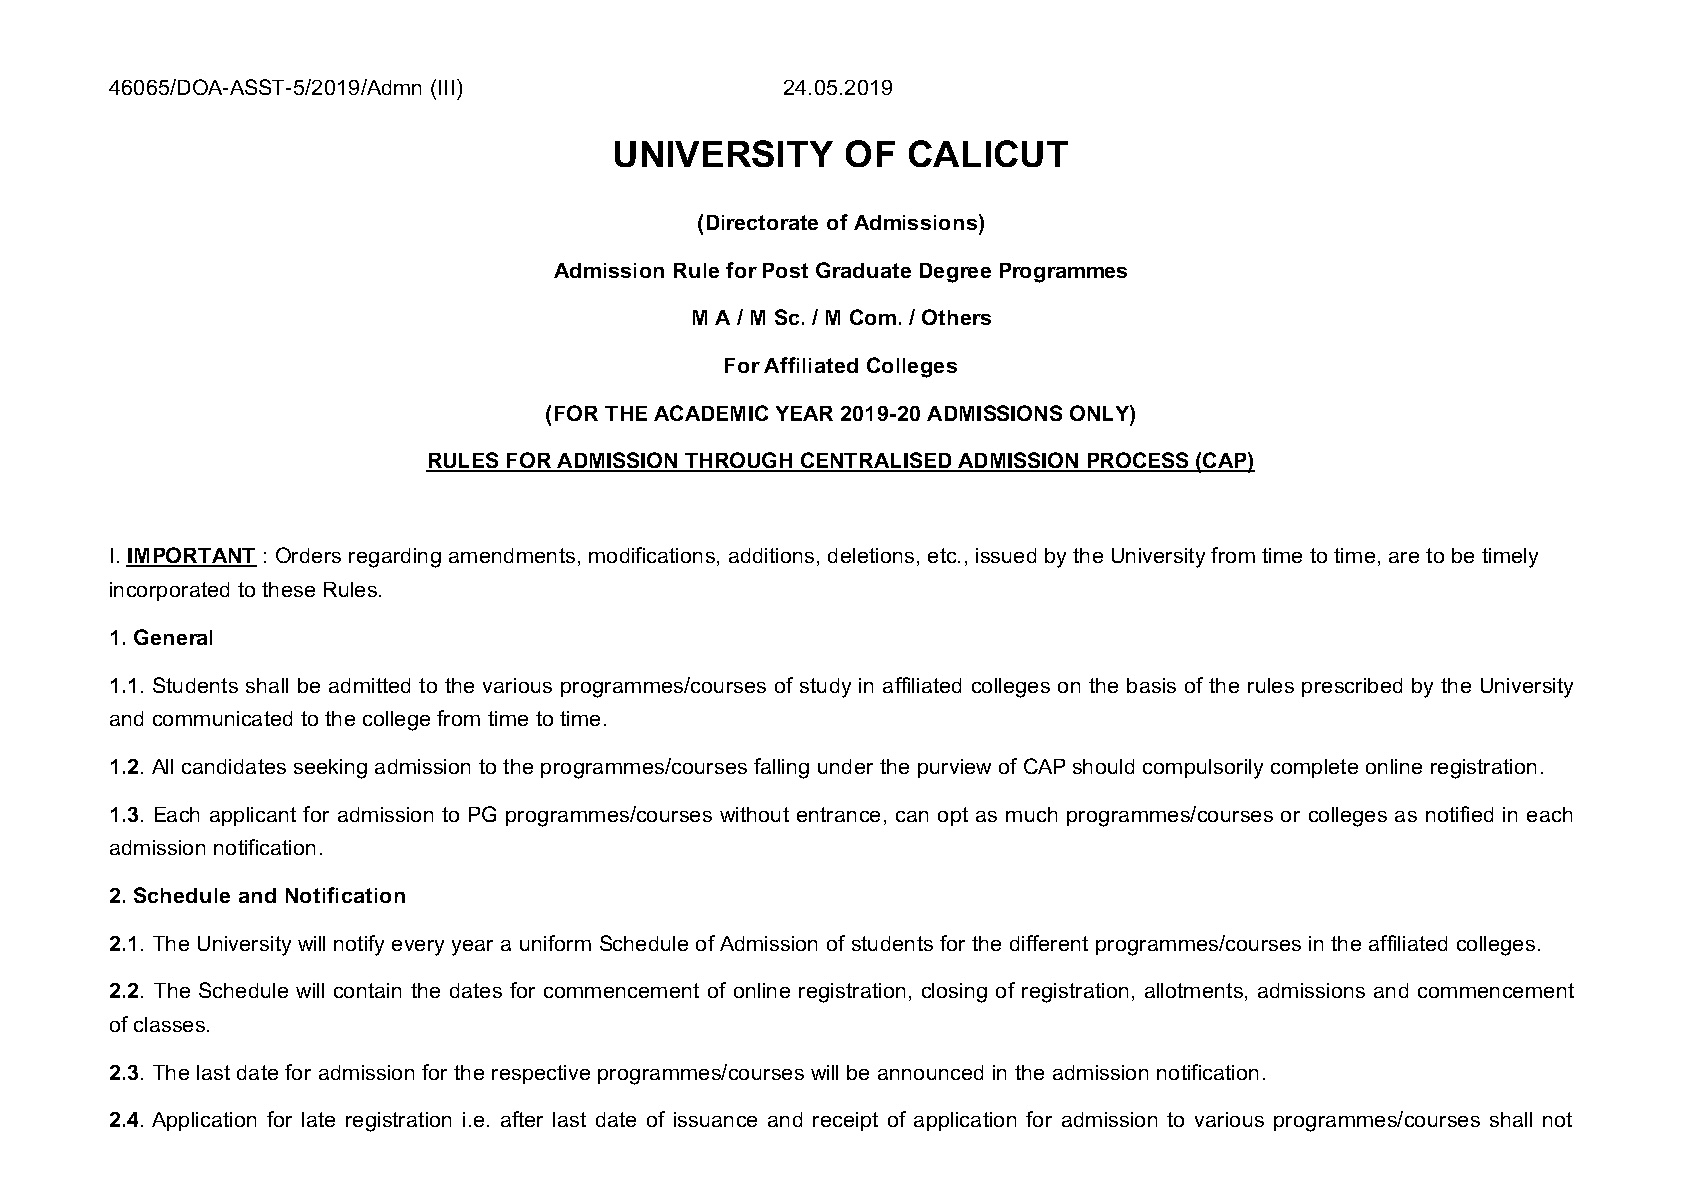 Calicut University Admission Rule for PG Programmes 2019 - Notification Image 1